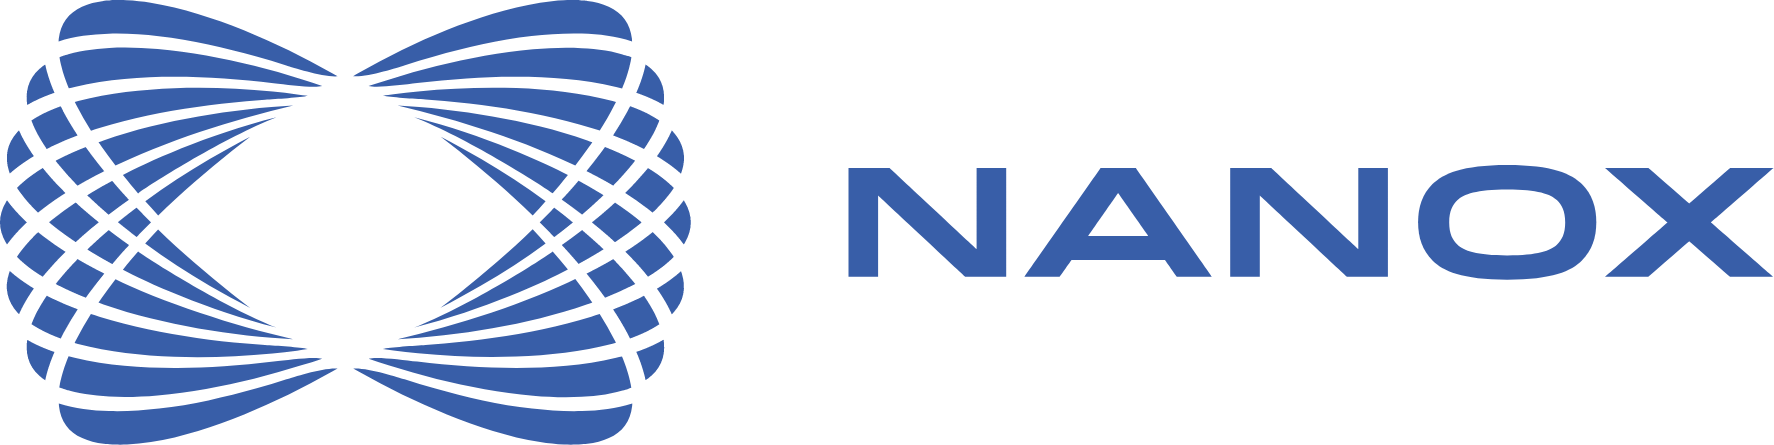 Nano-X Imaging logo large (transparent PNG)